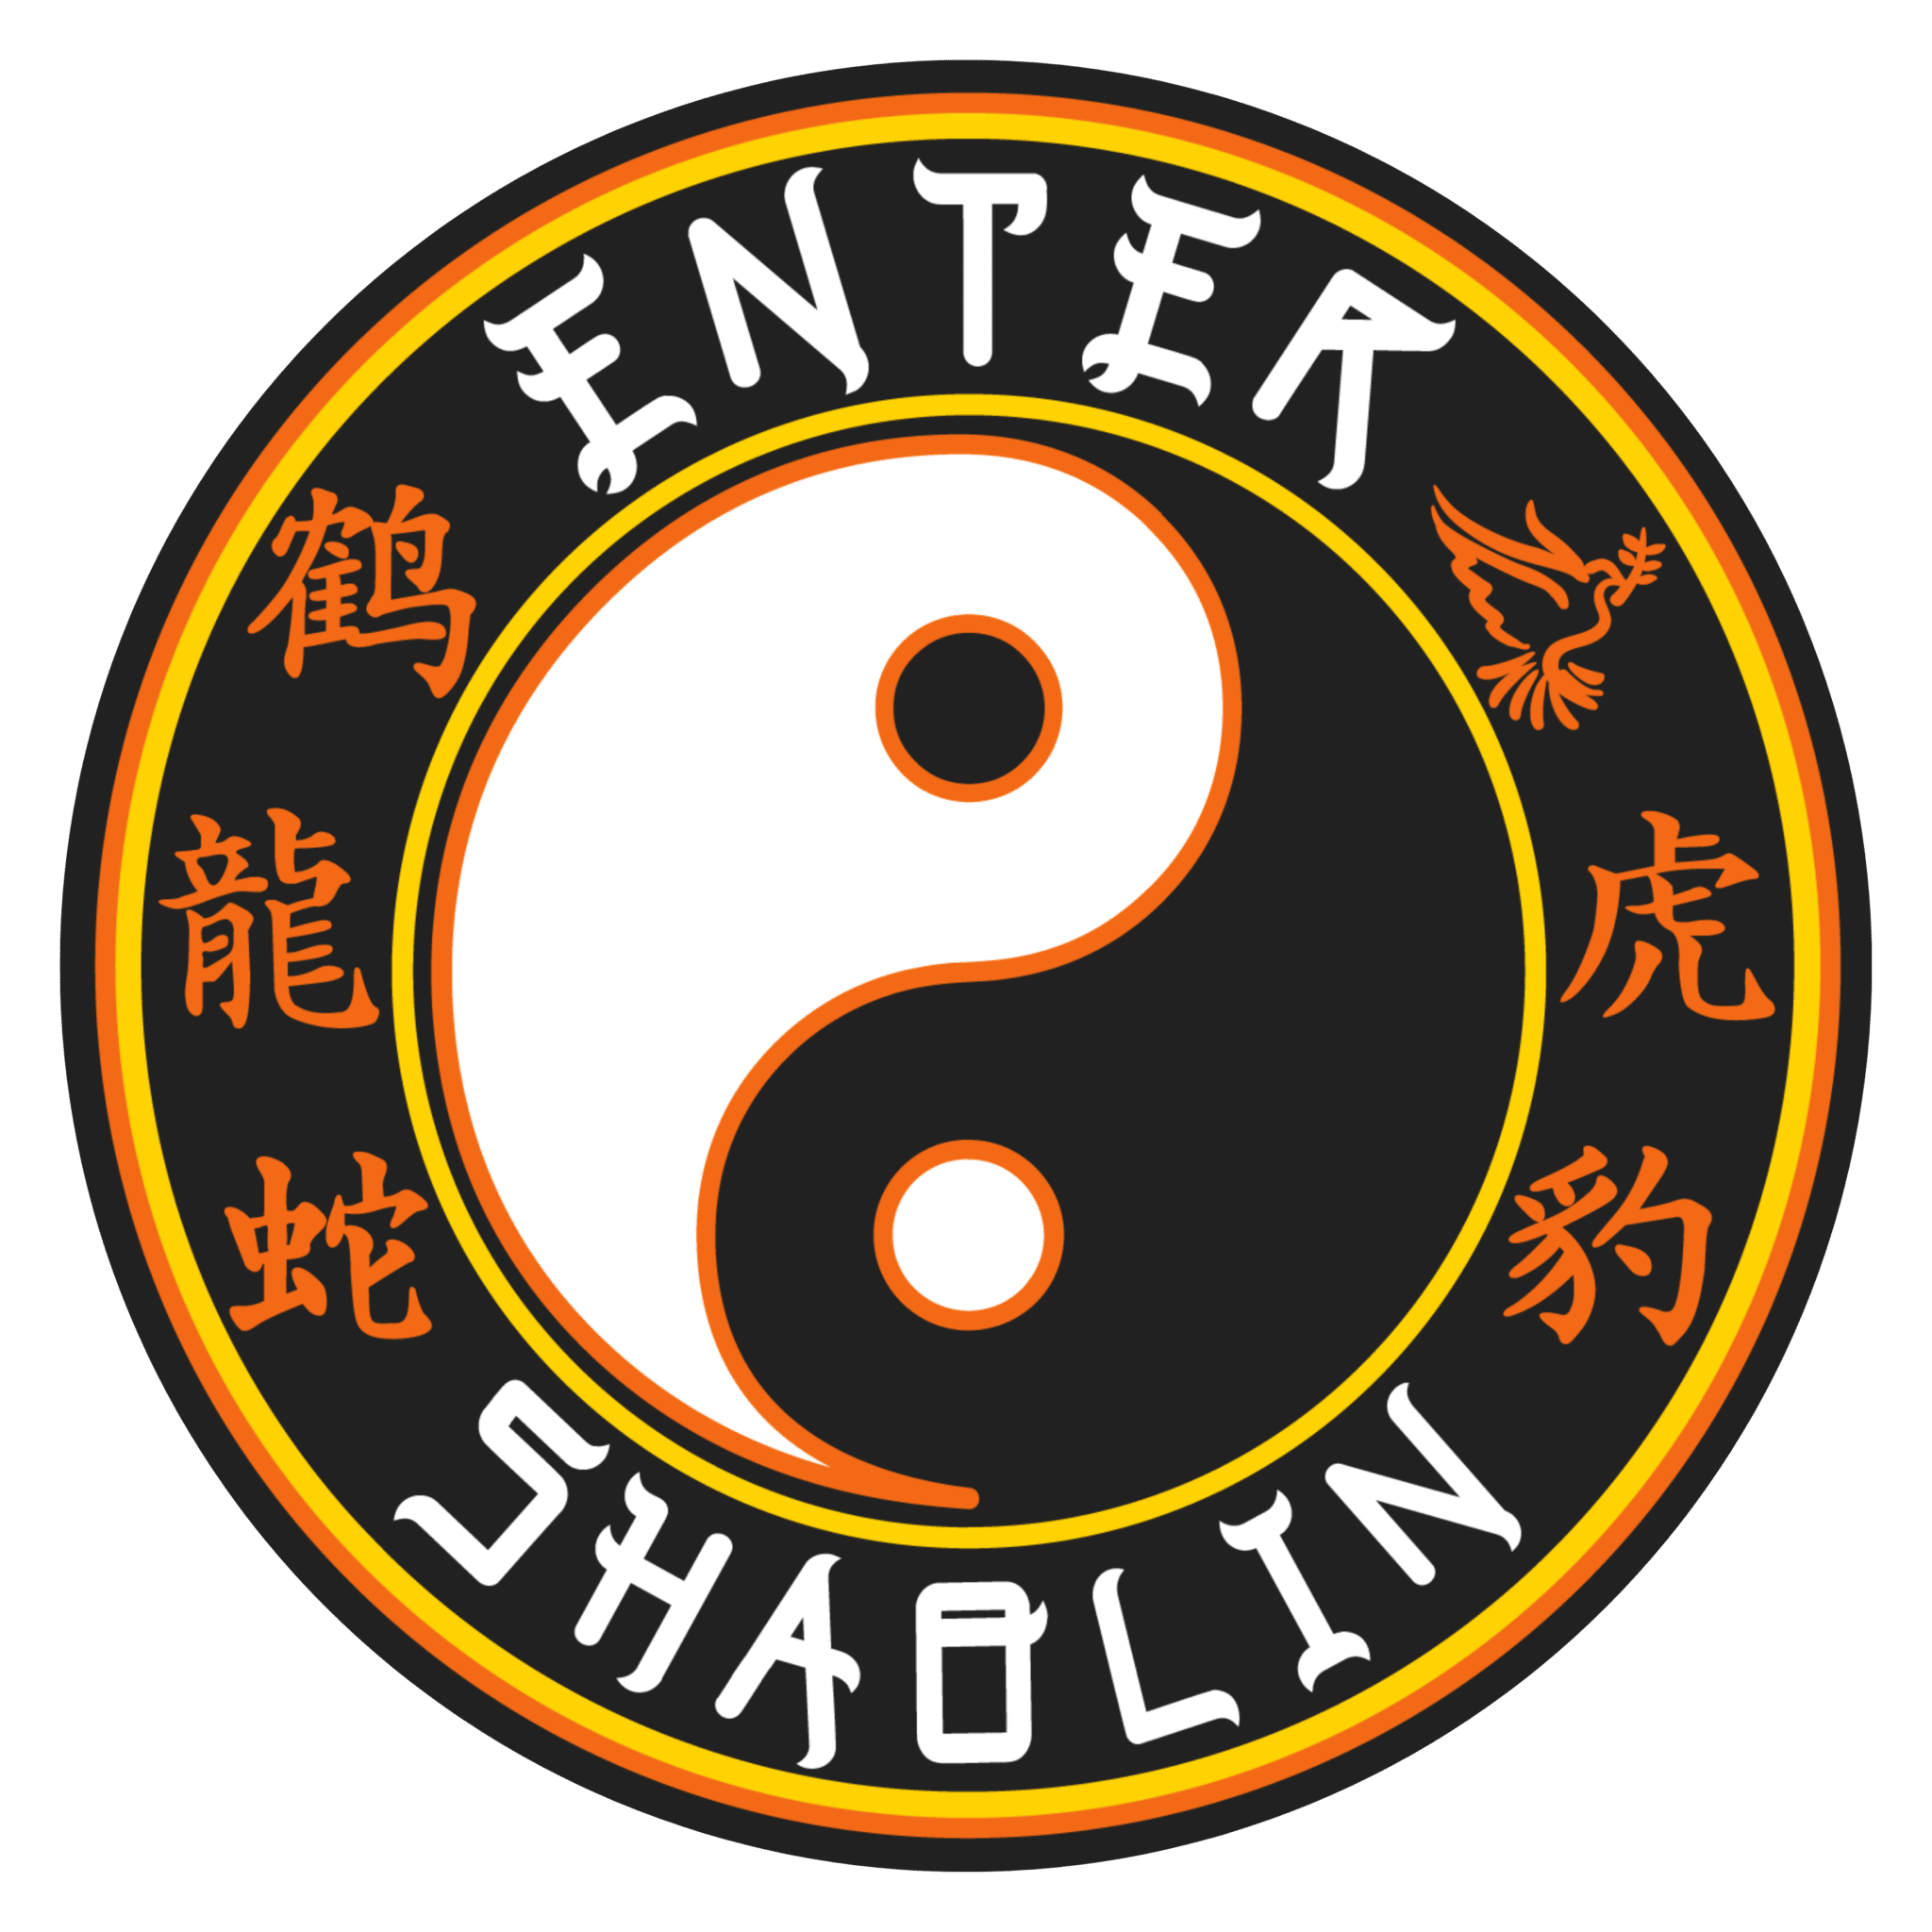 ENTER SHAOLIN |  LEARN KUNG FU ONLINE